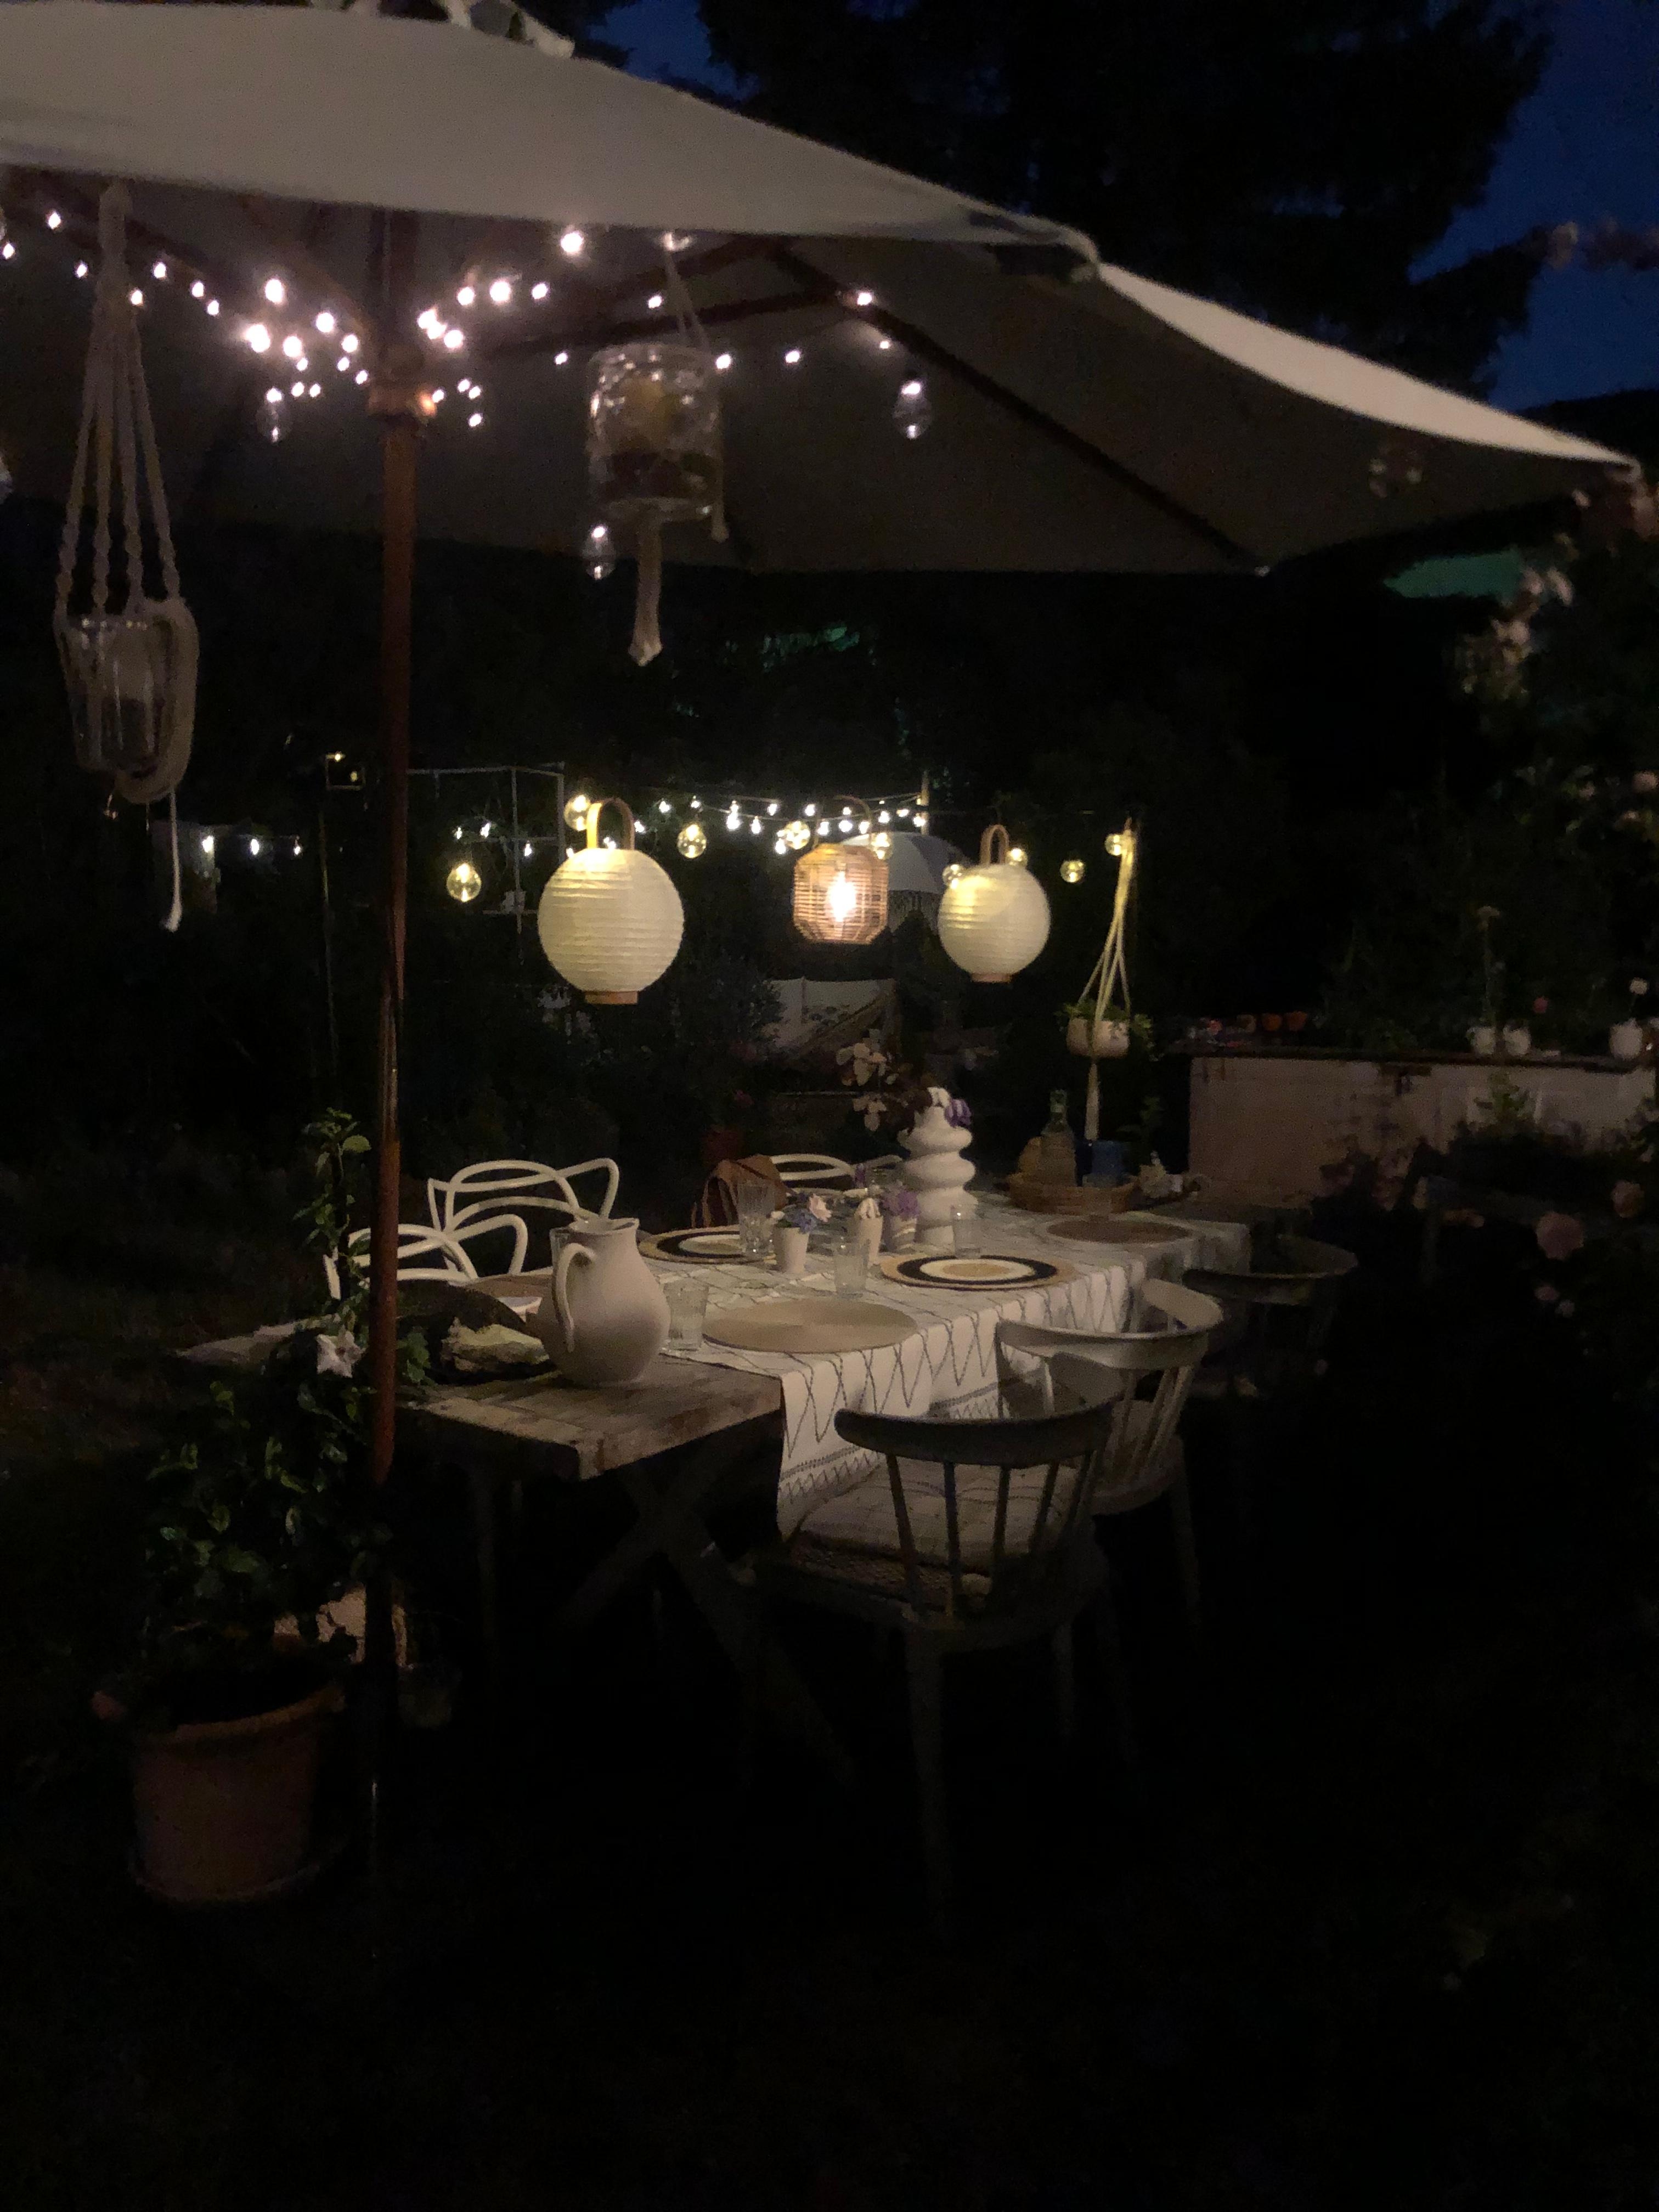 Summer nights 
#outdoorliving #summernight #outdoorbeleuchtung #meingarten